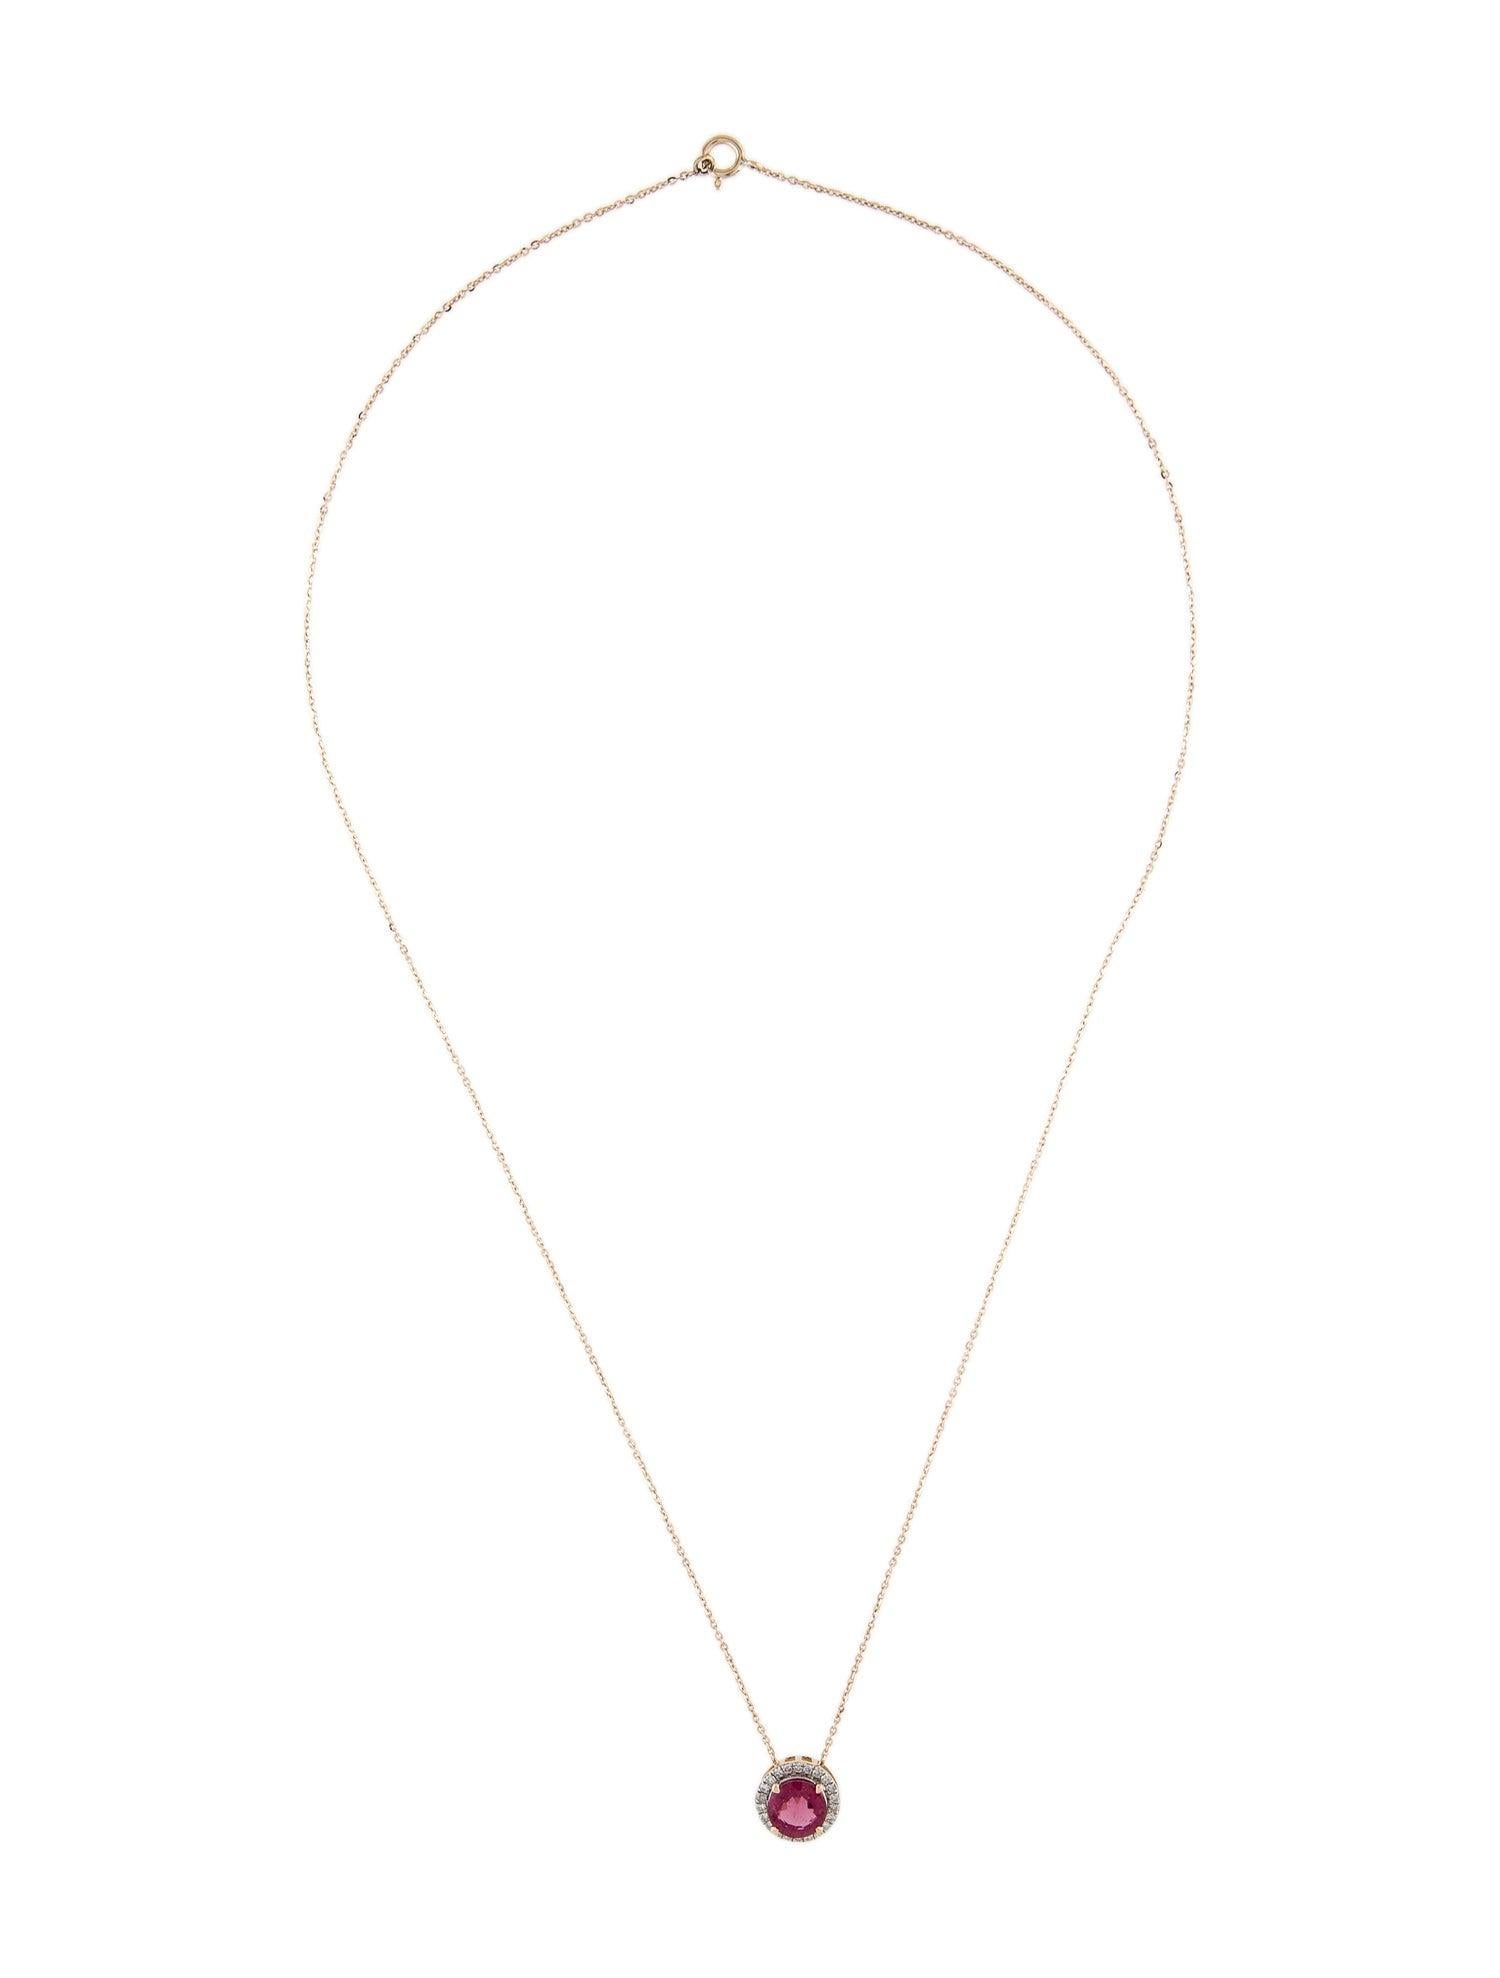 Women's 14K 1.09ct Tourmaline & Diamond Pendant Necklace: Luxury Statement Jewelry Piece For Sale